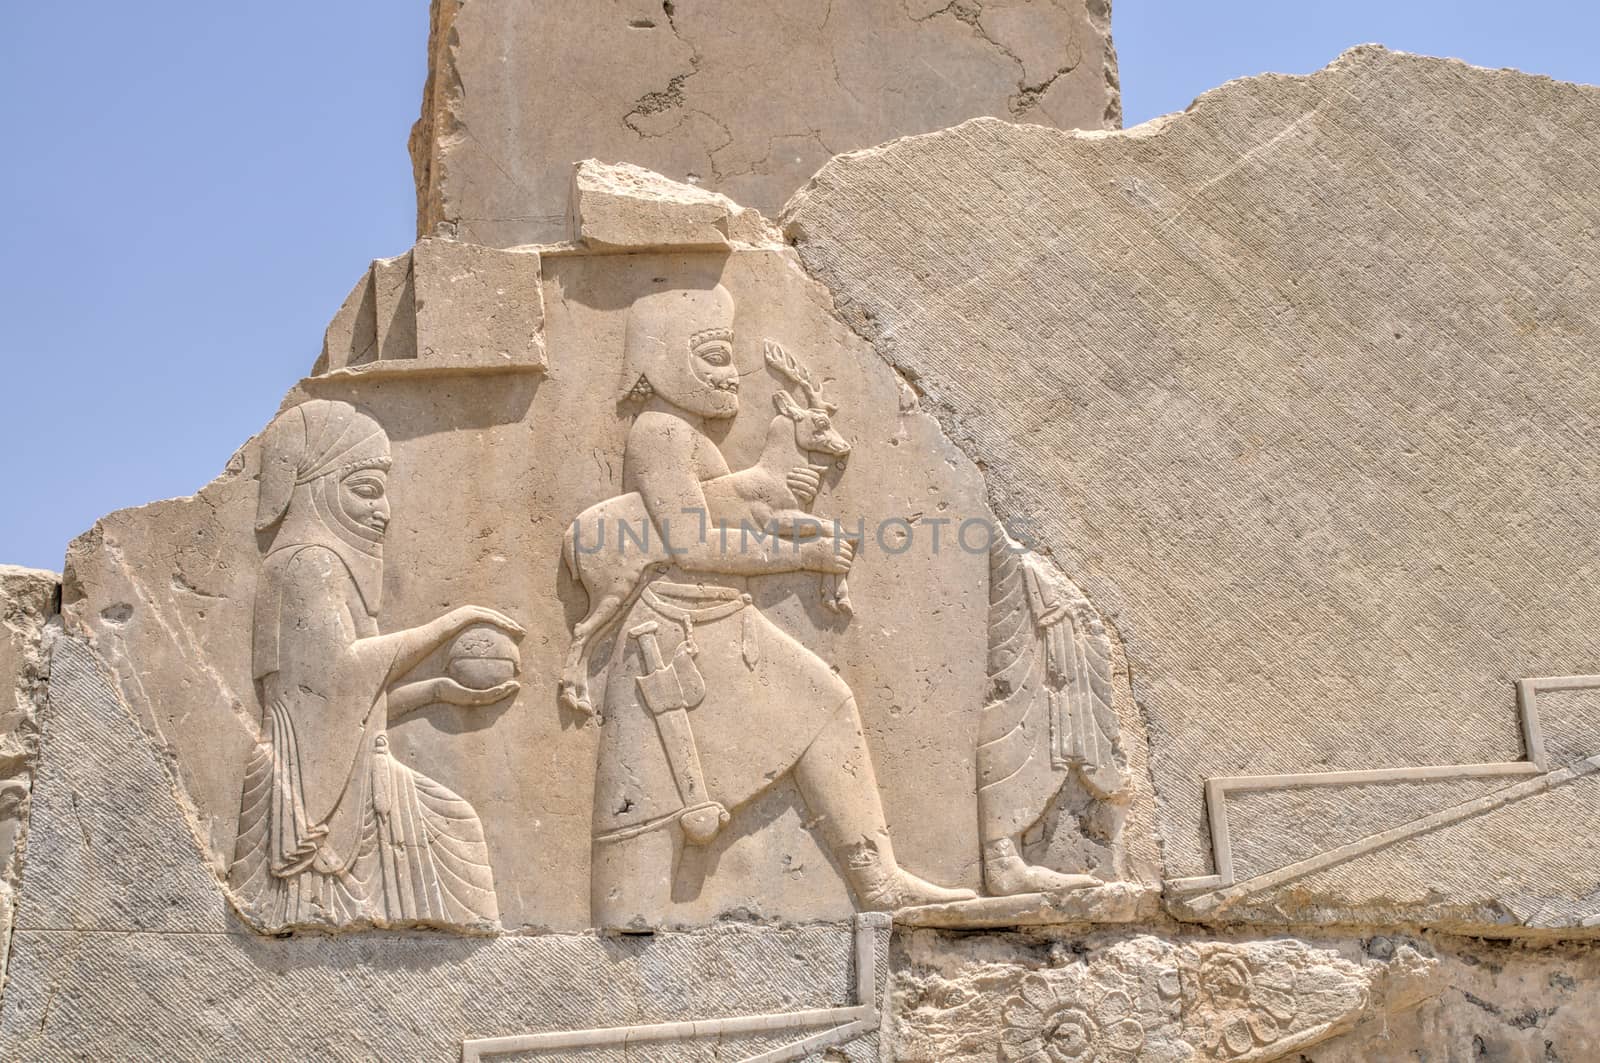 Figures on walls of ancient persian capital Persepolis in current Iran